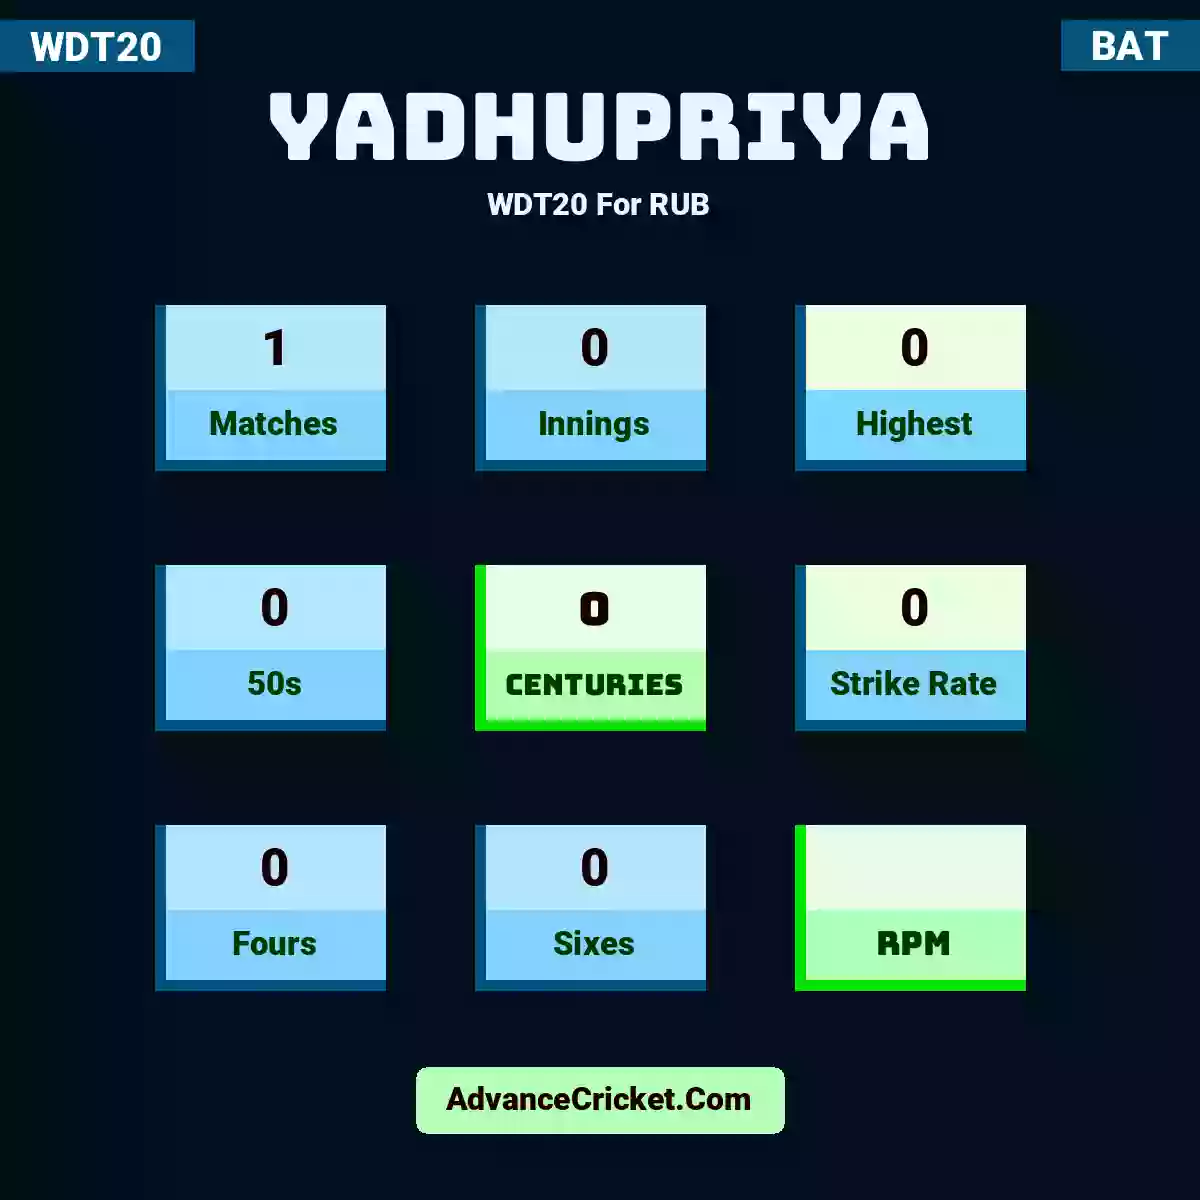 Yadhupriya WDT20  For RUB, Yadhupriya played 1 matches, scored 0 runs as highest, 0 half-centuries, and 0 centuries, with a strike rate of 0. Yadhupriya hit 0 fours and 0 sixes.